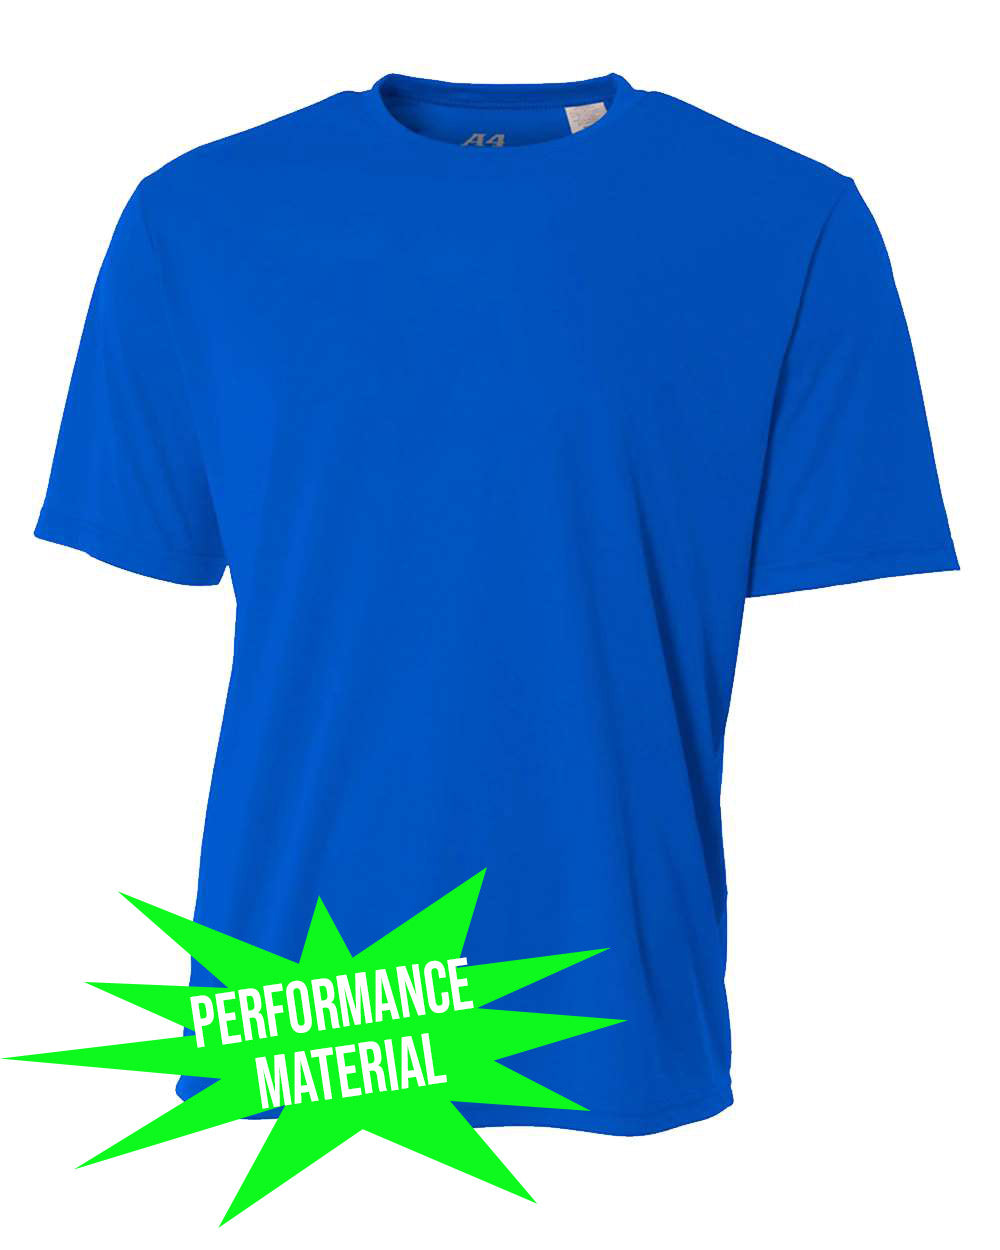 KRHS Performance Material design 3 T-Shirt